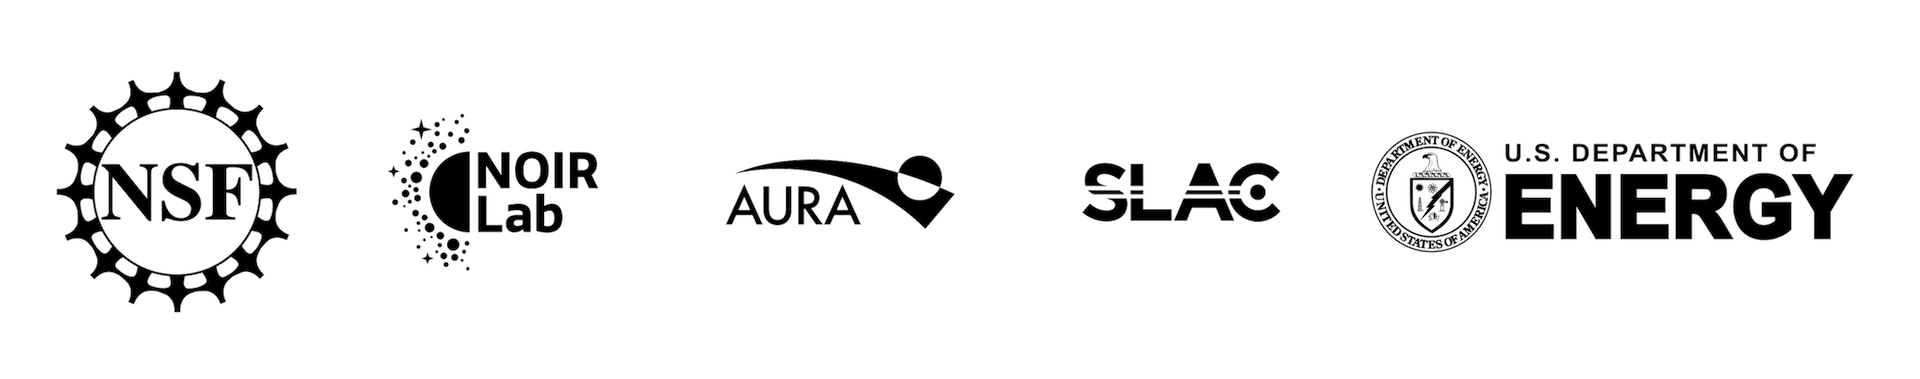 Logos of the NSF, NOIRLab, AURA, SLAC, and US DOE